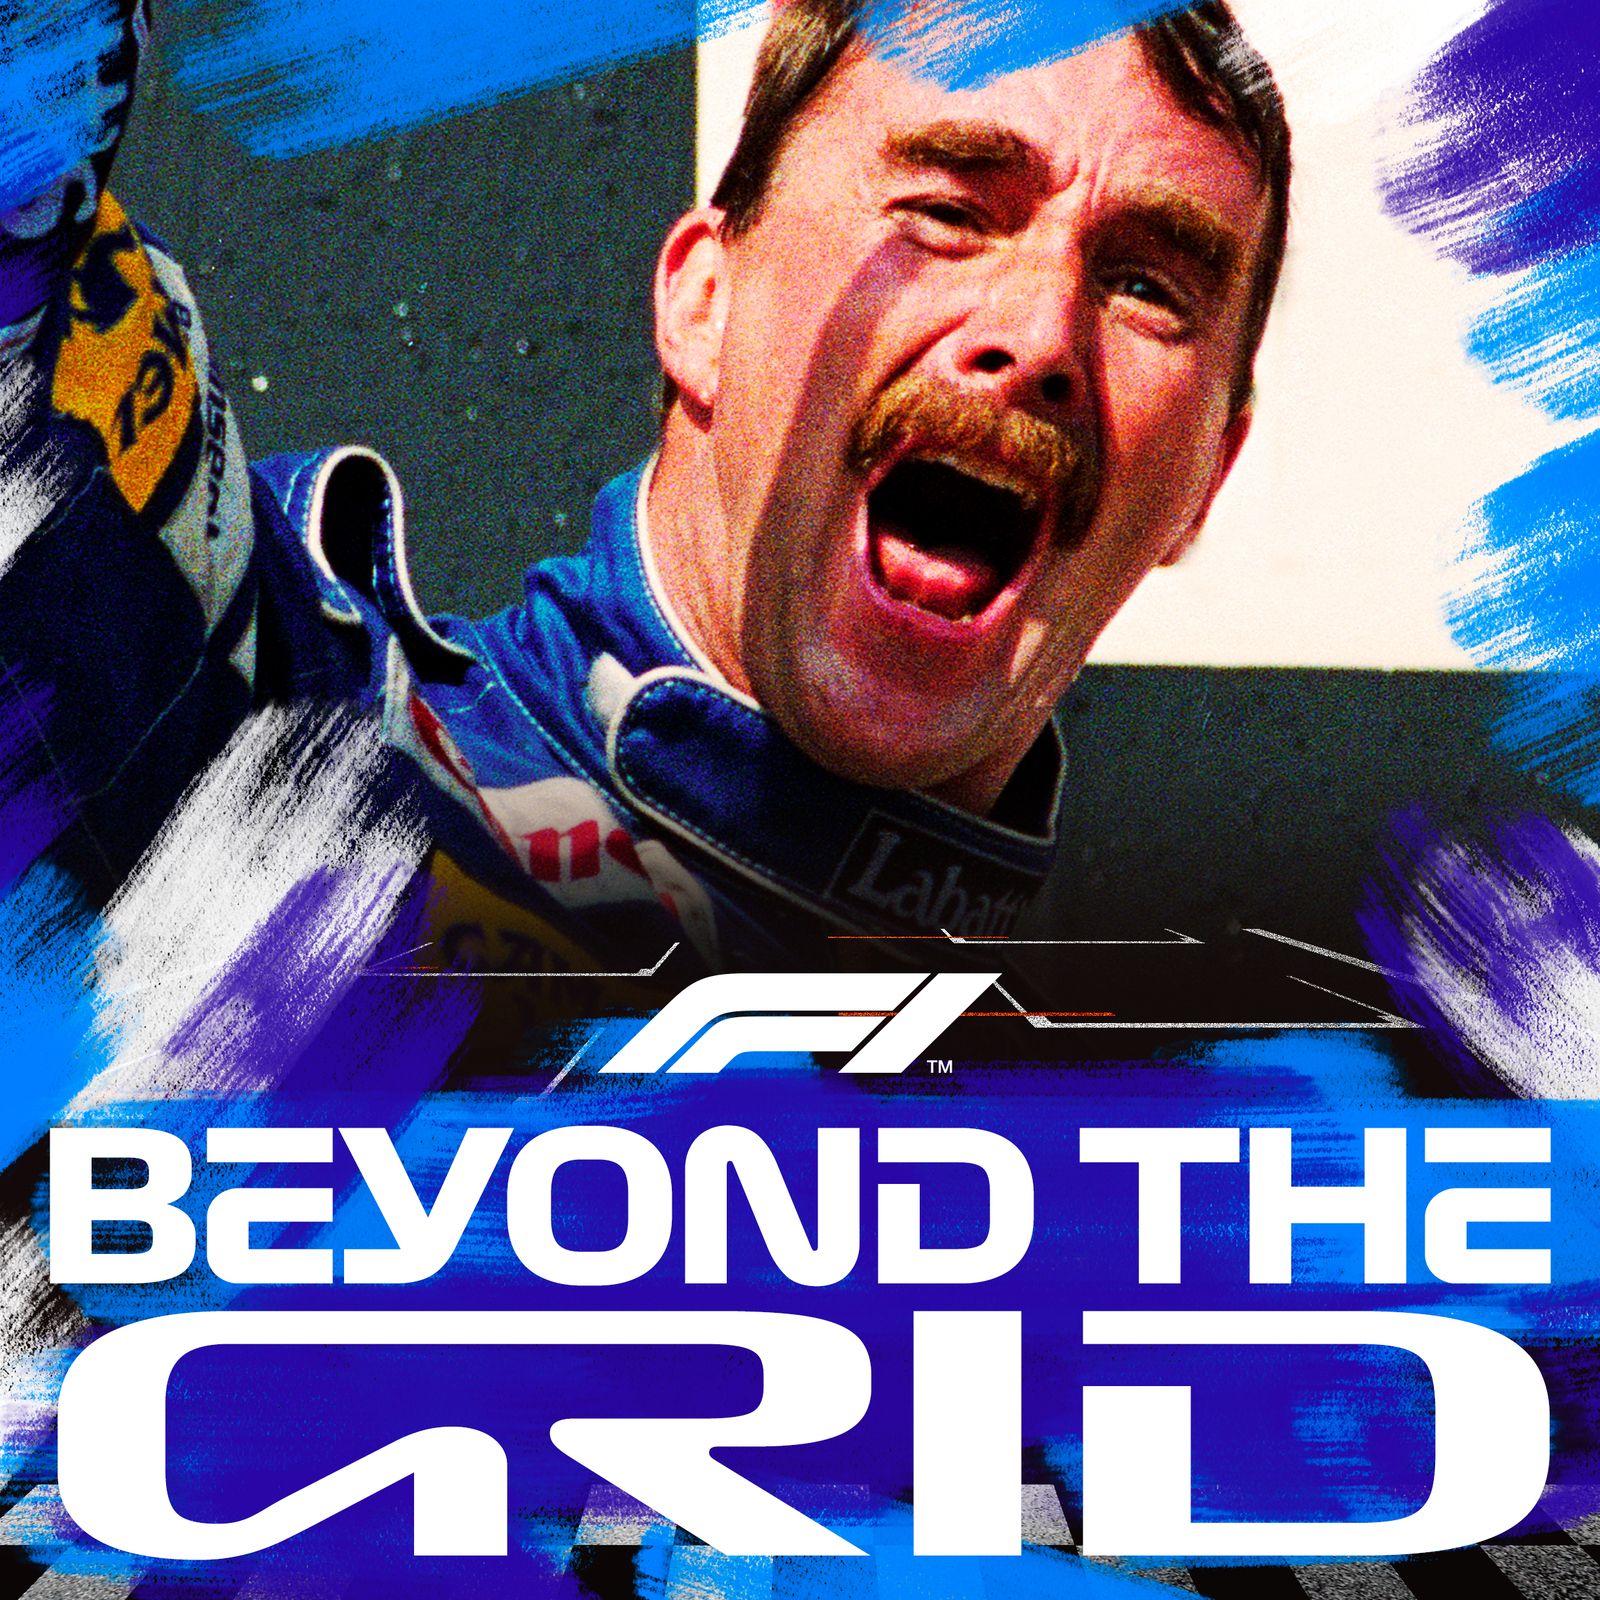 Nigel Mansell: 1992 World Champion, through the pain